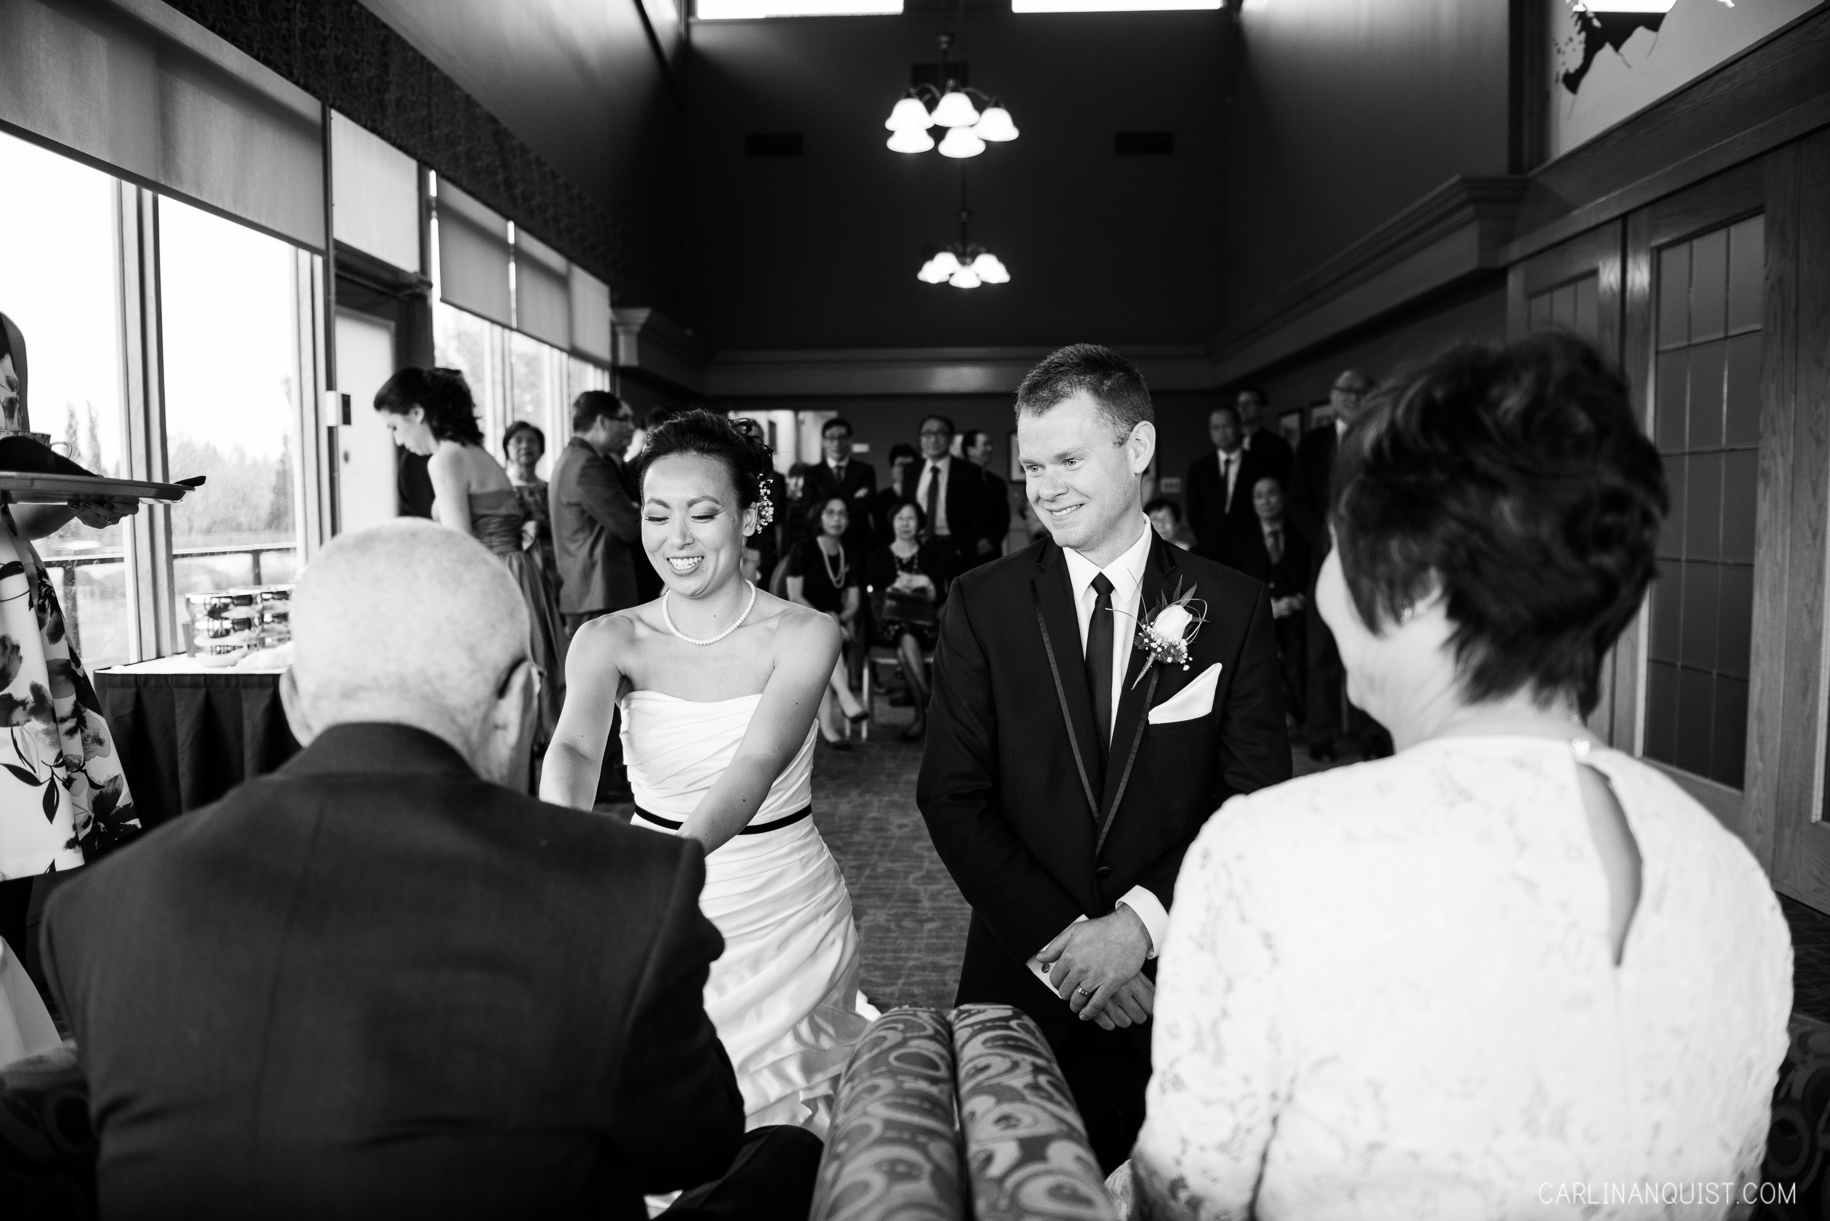 Chinese Tea Ceremony | Earl Grey Golf Club Wedding Photographer